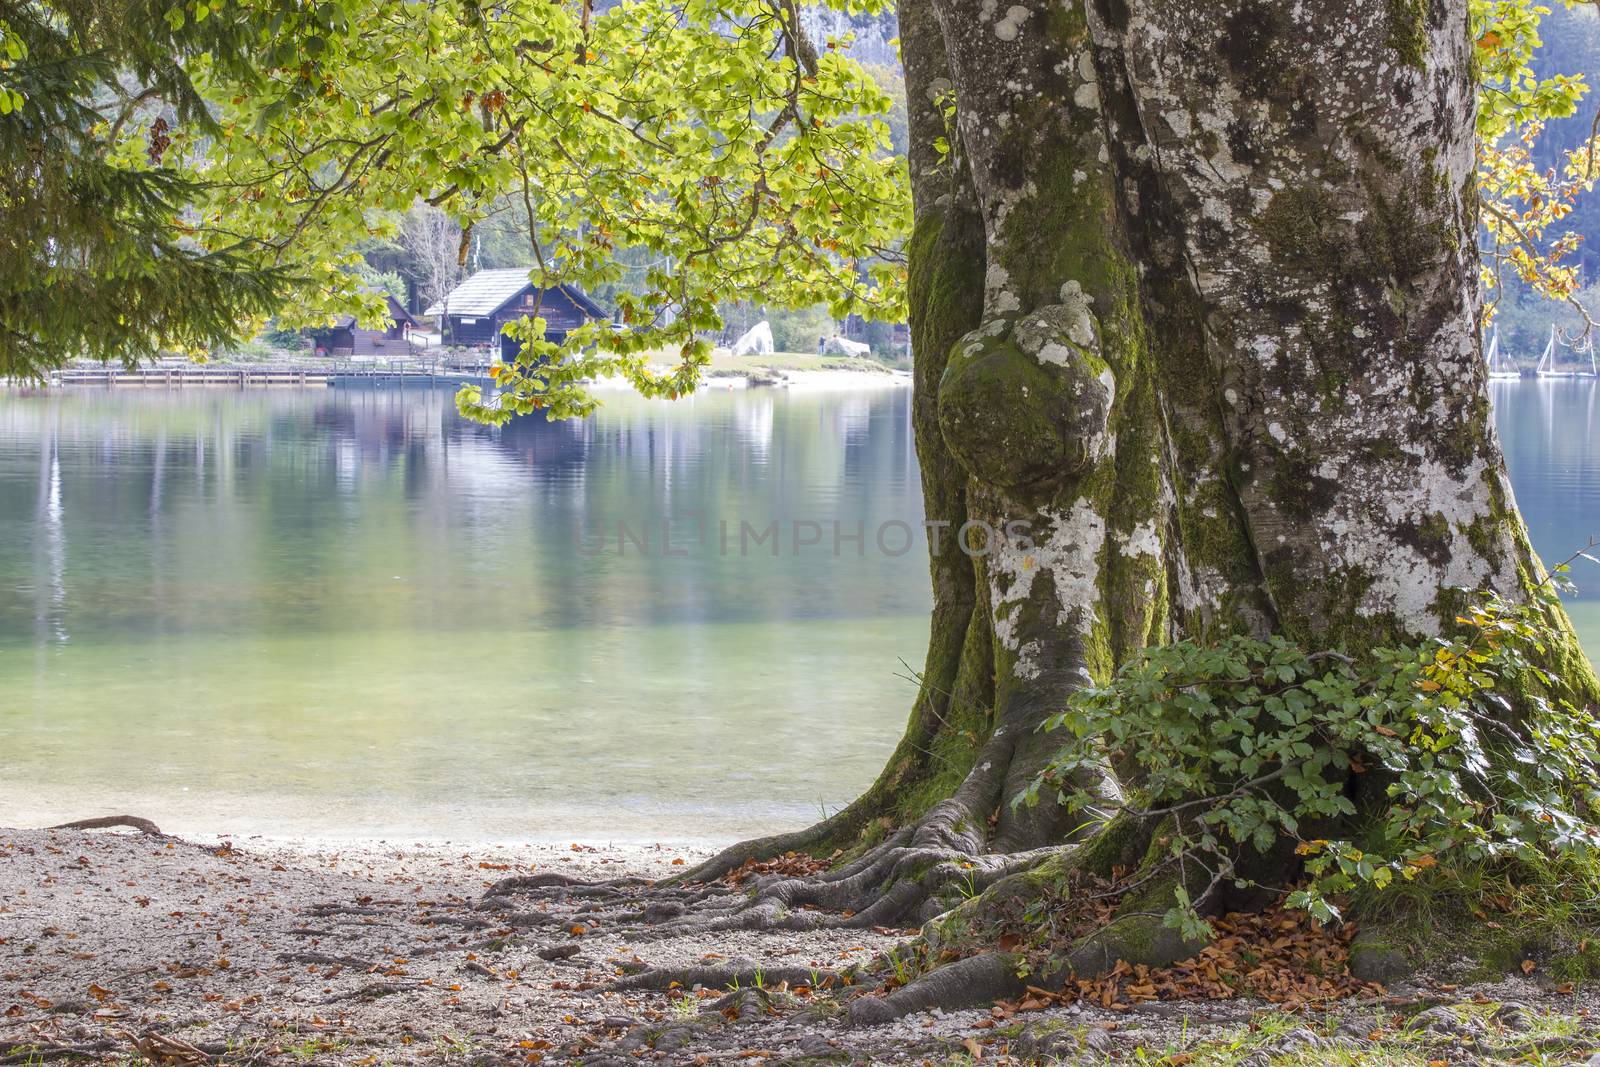 Old tree by the Bohinj lake, Slovenia by miradrozdowski